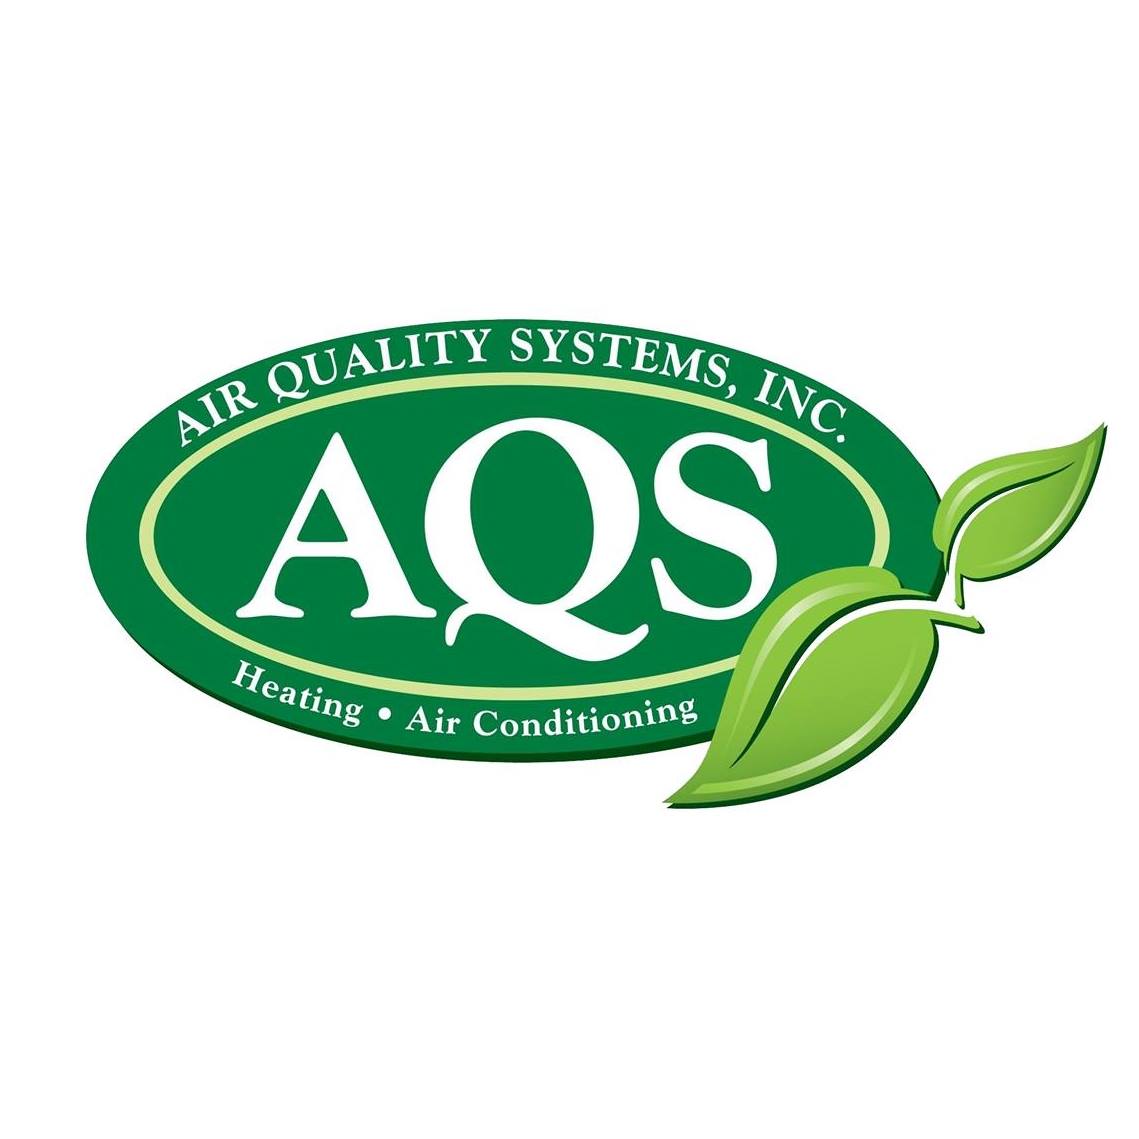 Air Quality Systems Inc 101 Hartz Blvd, Broadway Virginia 22815